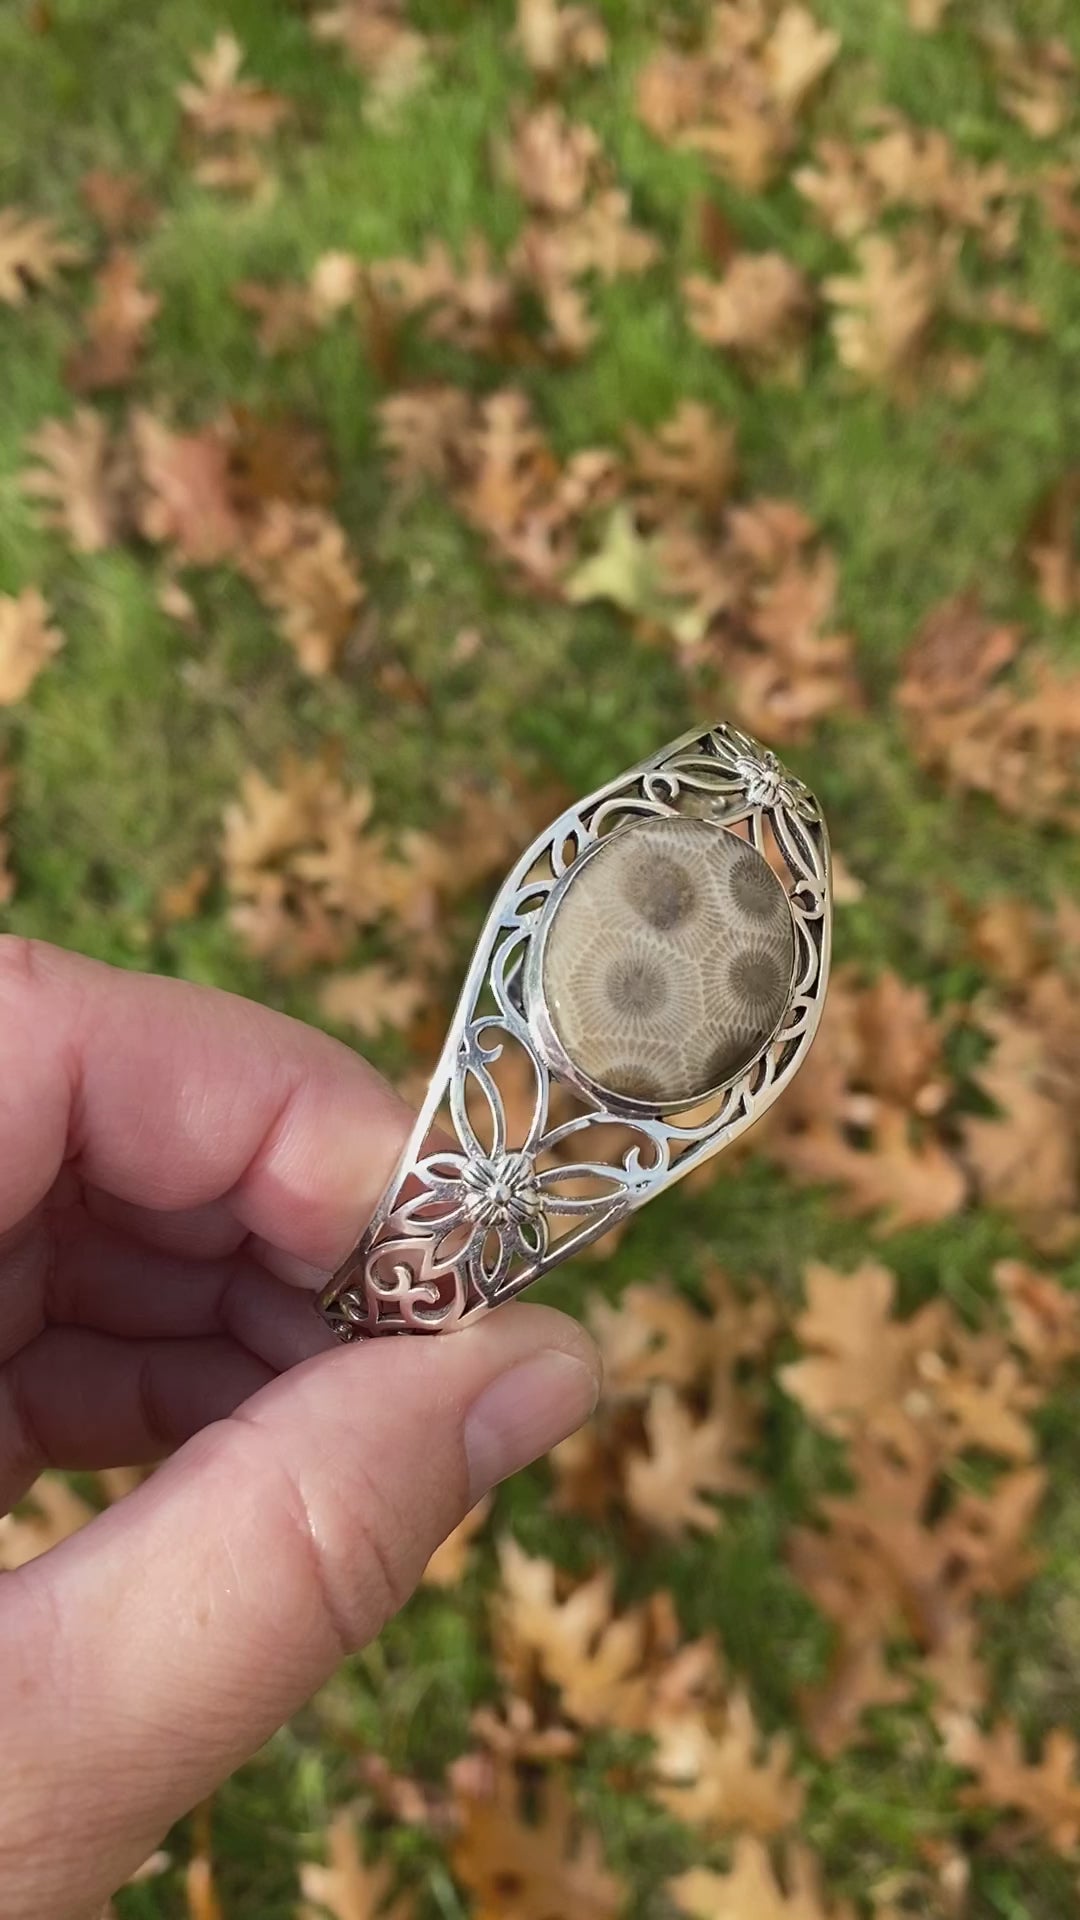 Petoskey Stone Cuff Bracelet Video - Stone Treasures by the Lake